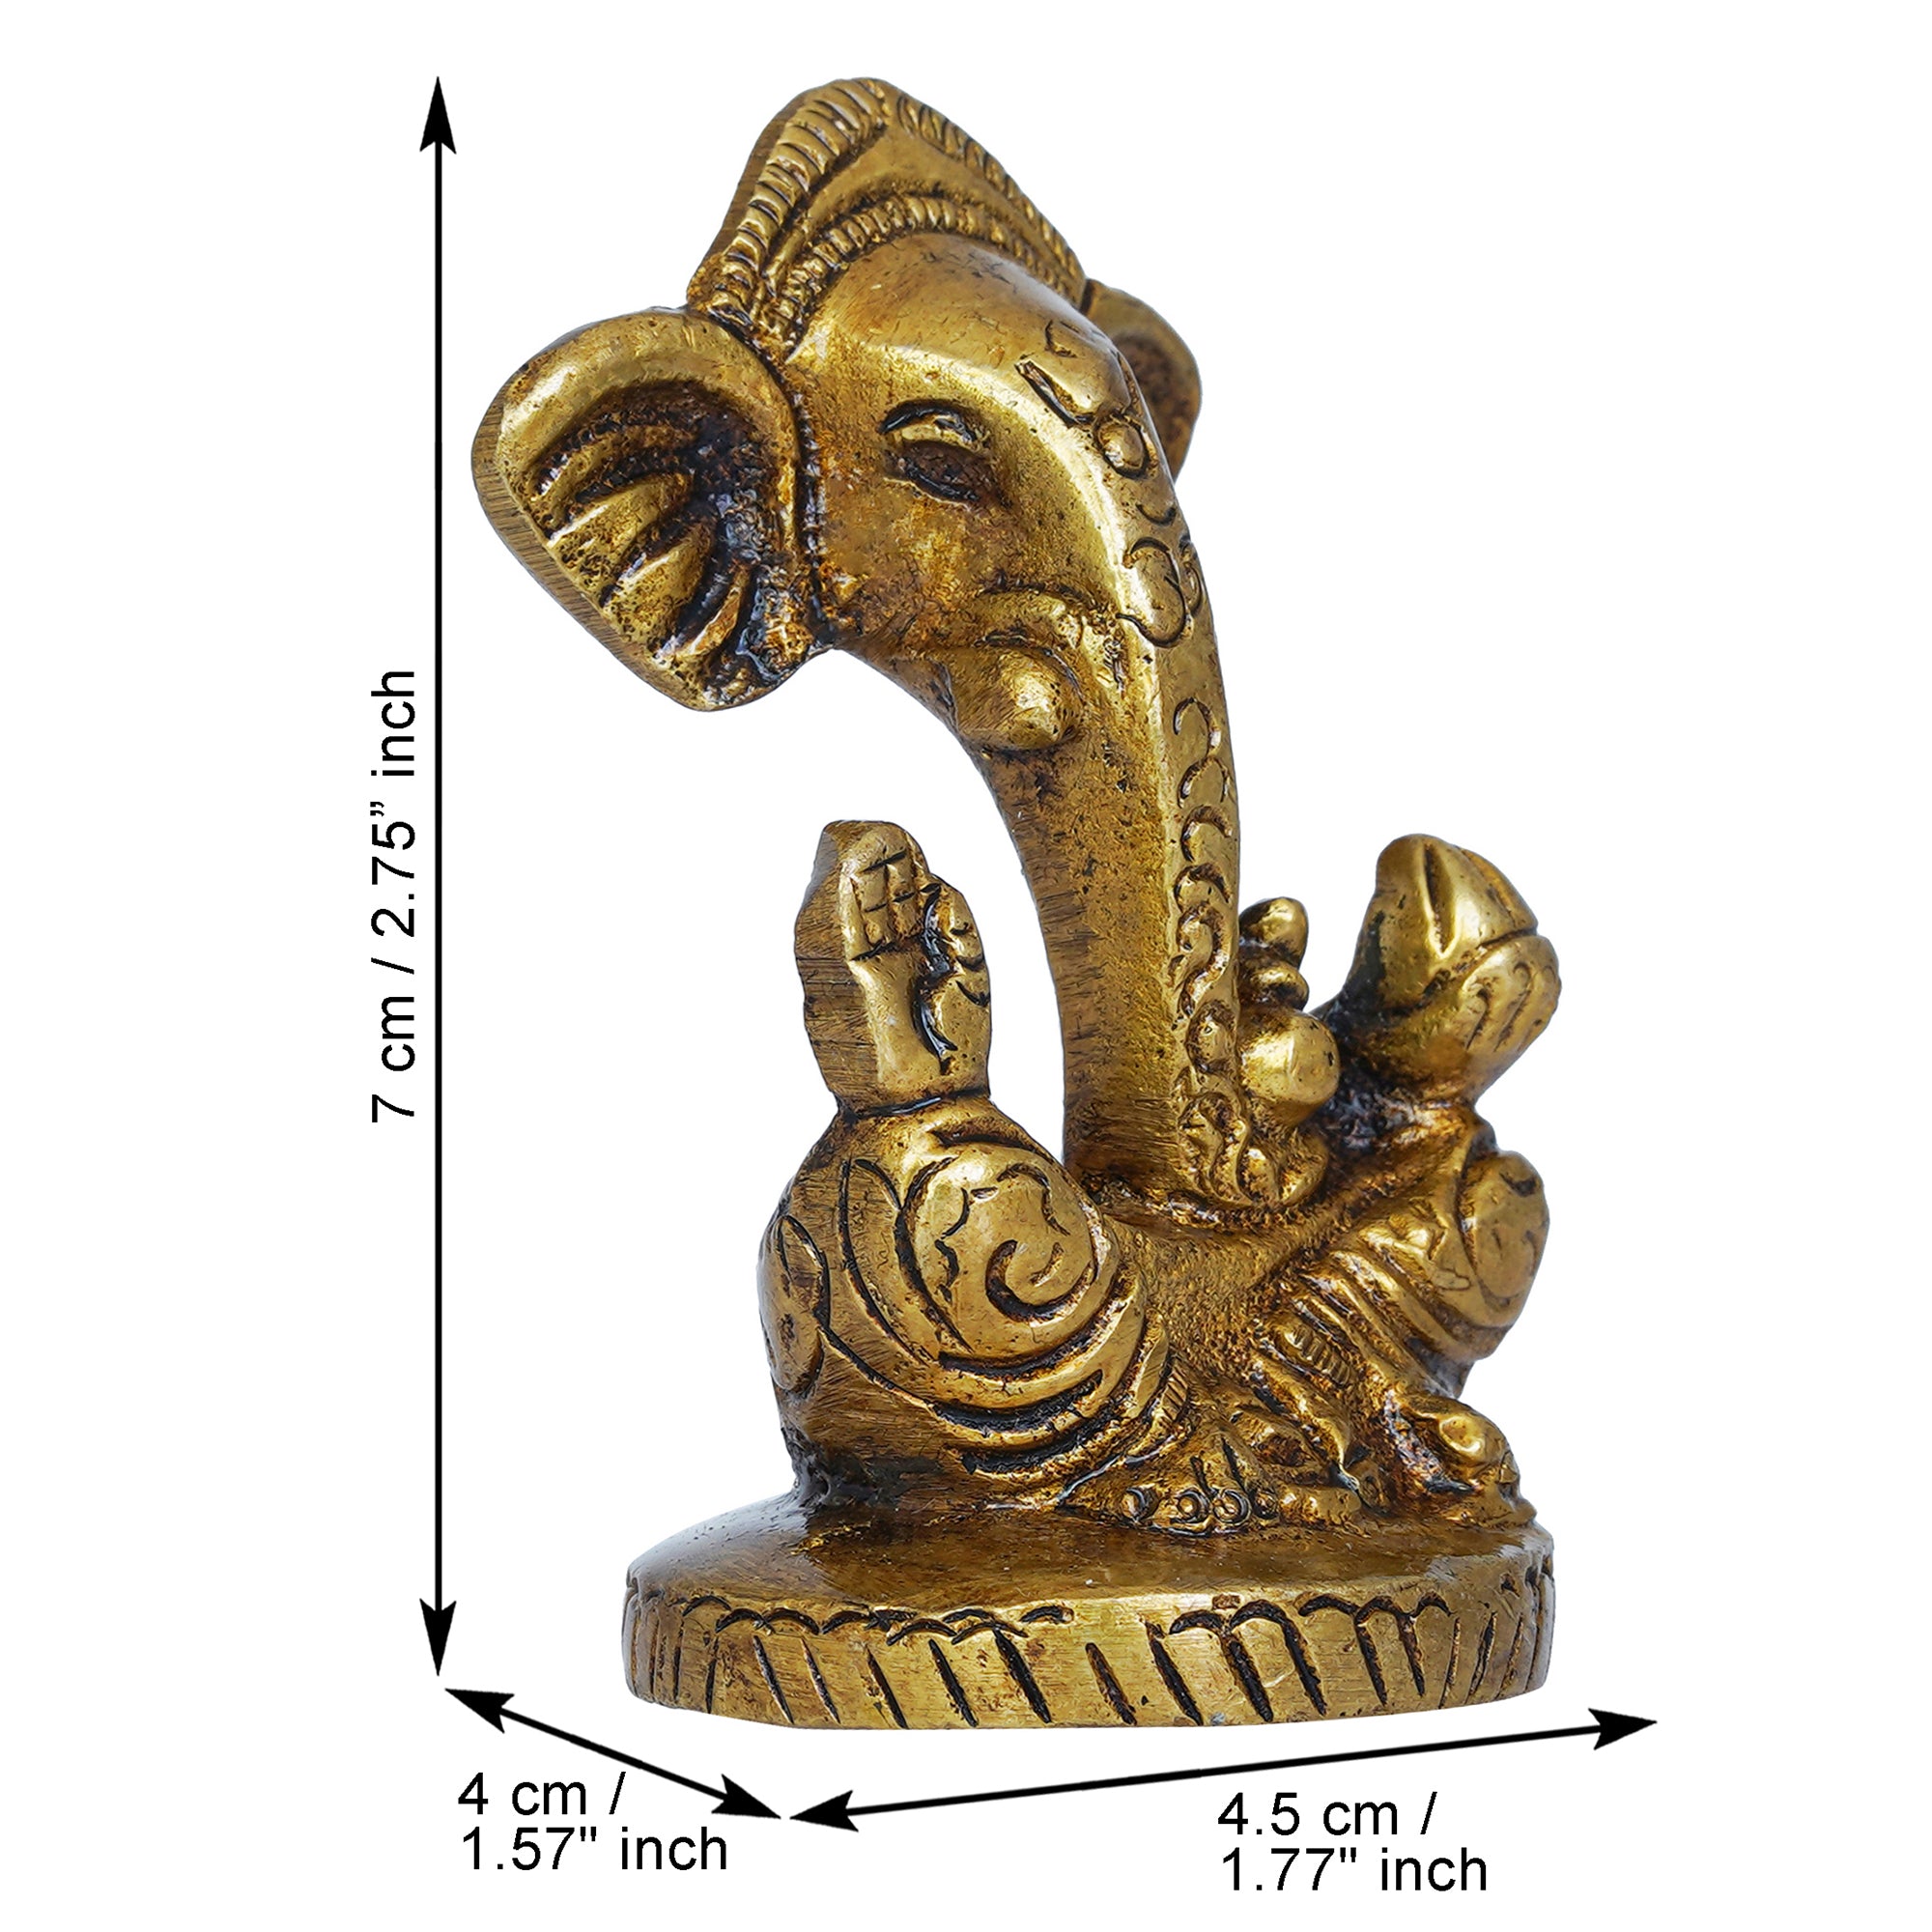 Golden Brass Blessing Lord Ganesha Idol Murti - God Statue for Car Dashboard, Home Decor, Office Desk, Temple Mandir 3